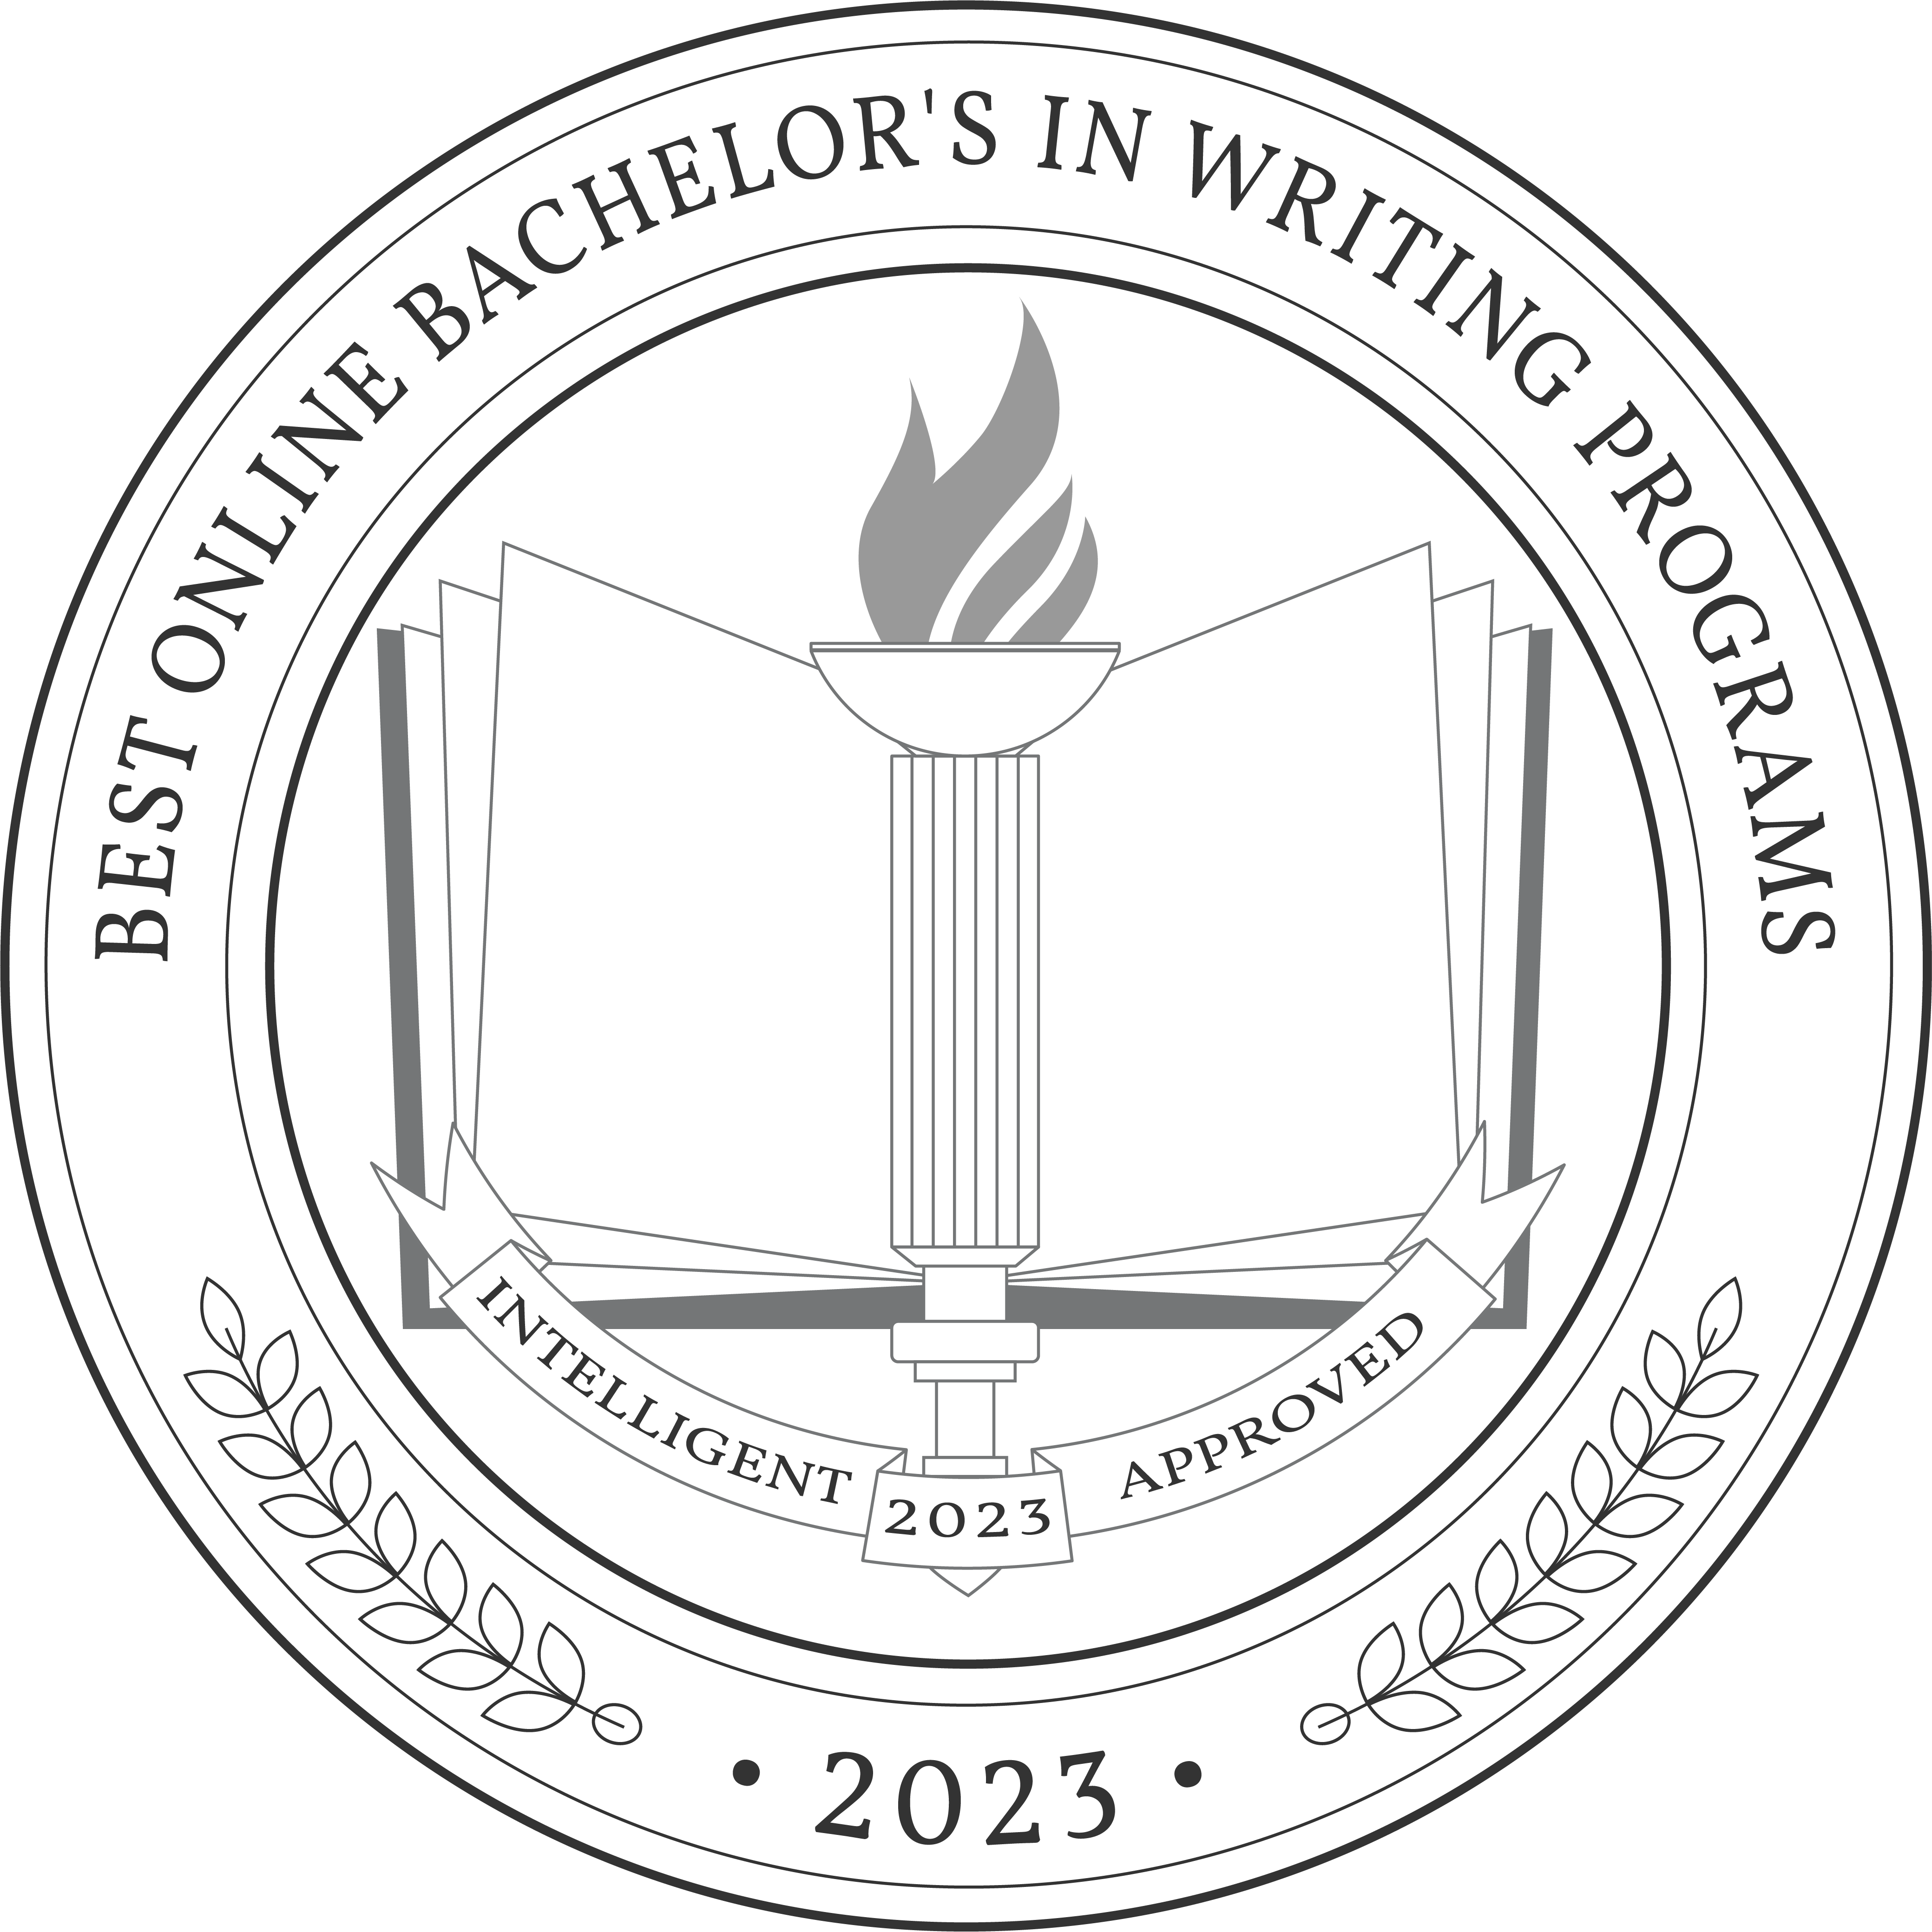 Best Online Bachelor's in Writing Programs badge